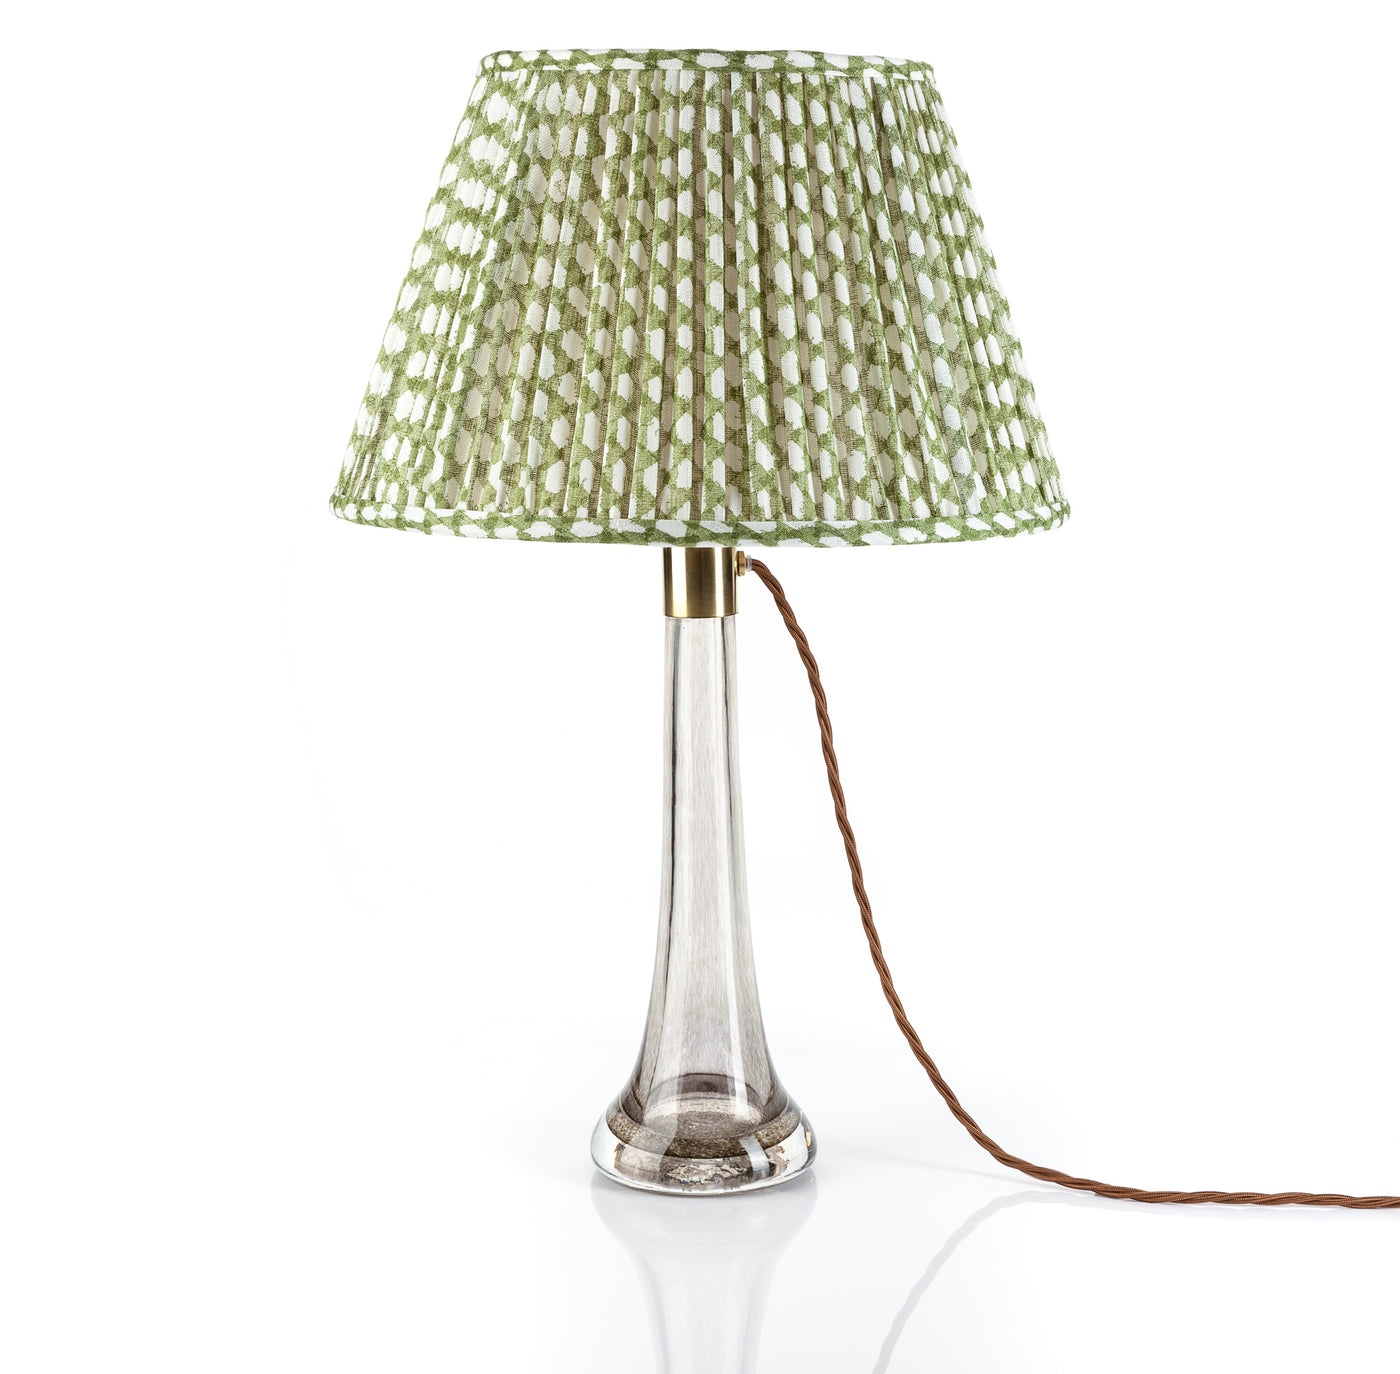 Fermoie Lampshade - Wicker in Green  | Newport Lamp And Shade | Located in Newport, RI